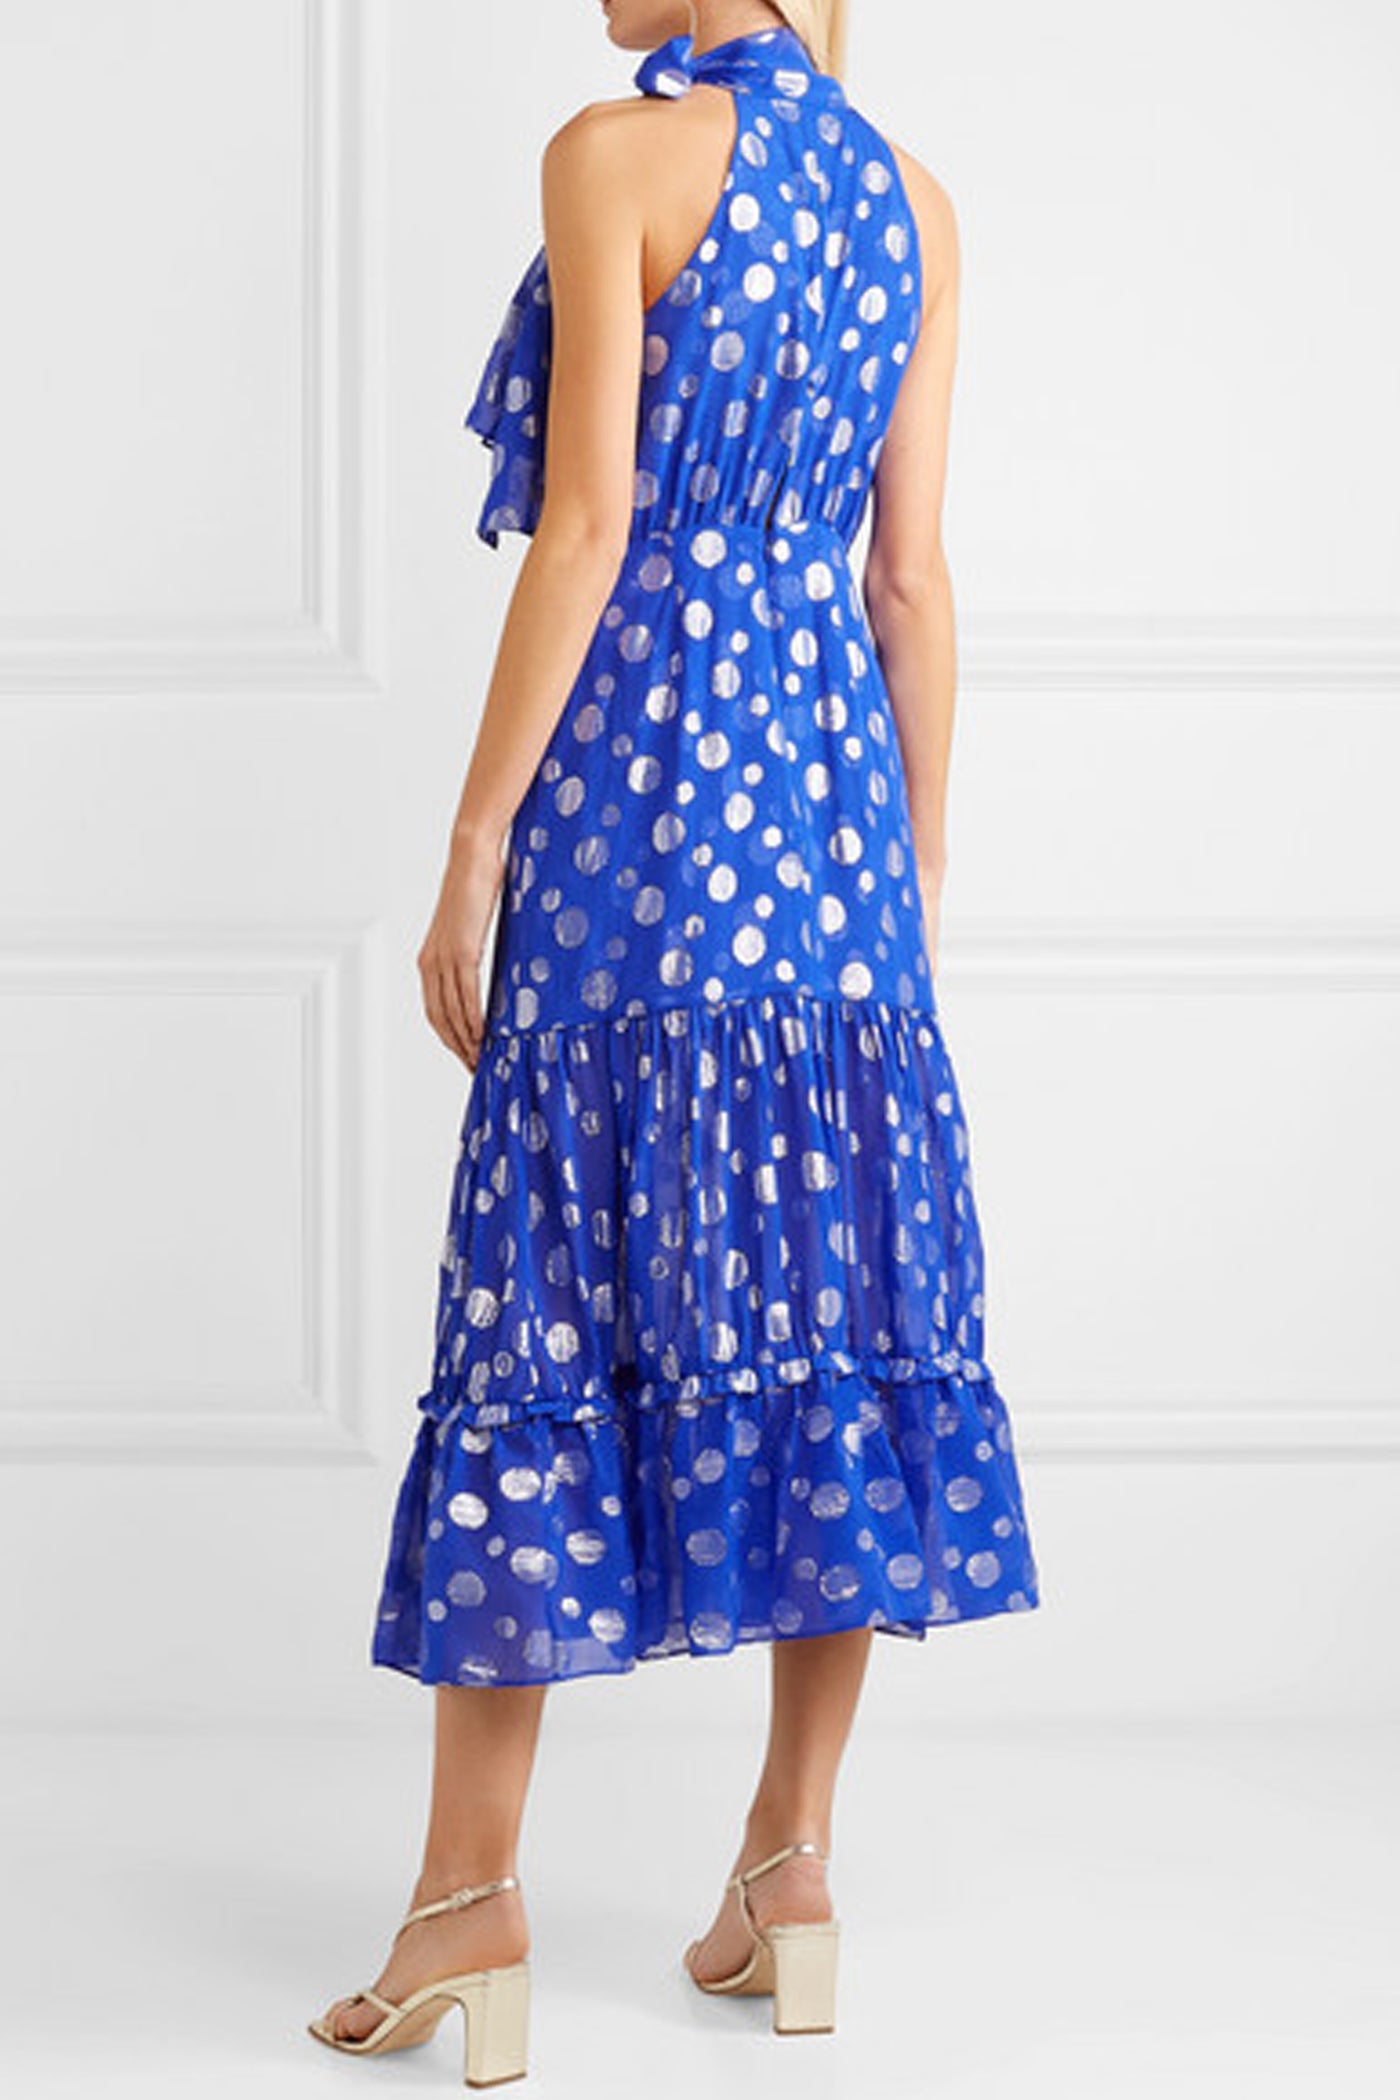 Elanor Lame Spot Dress by Rixo London